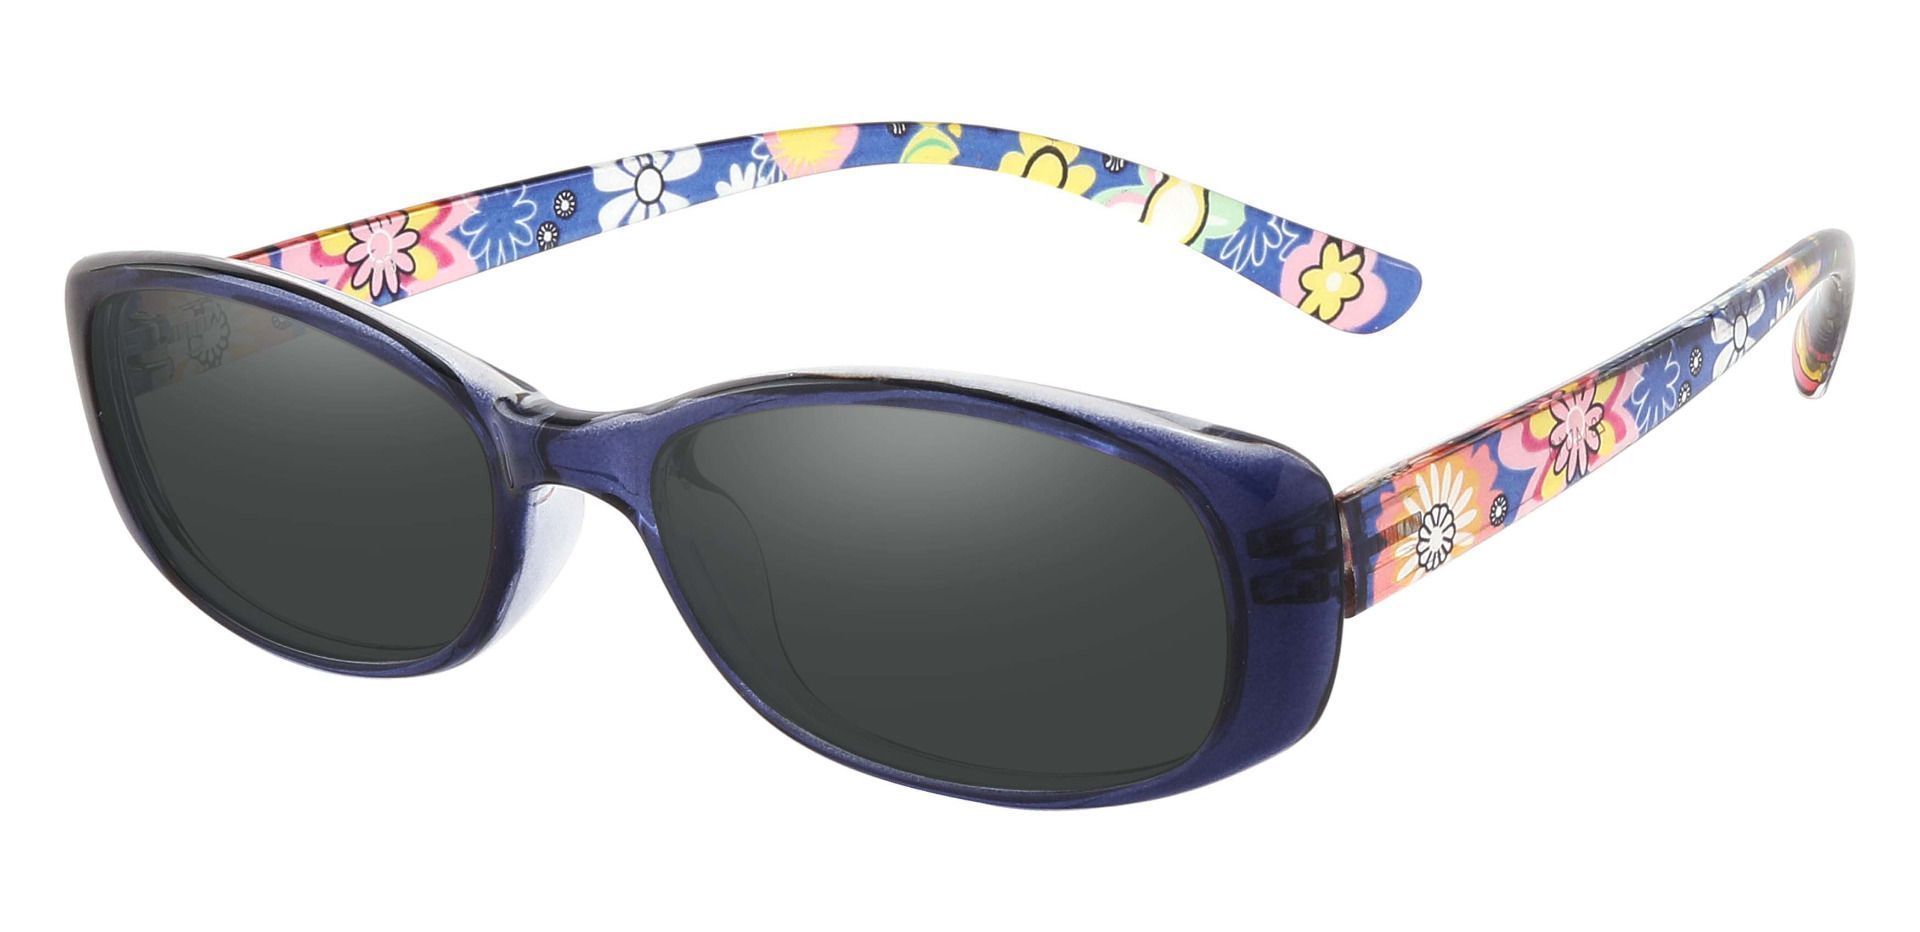 Bethesda Rectangle Progressive Sunglasses - Blue Frame With Gray Lenses